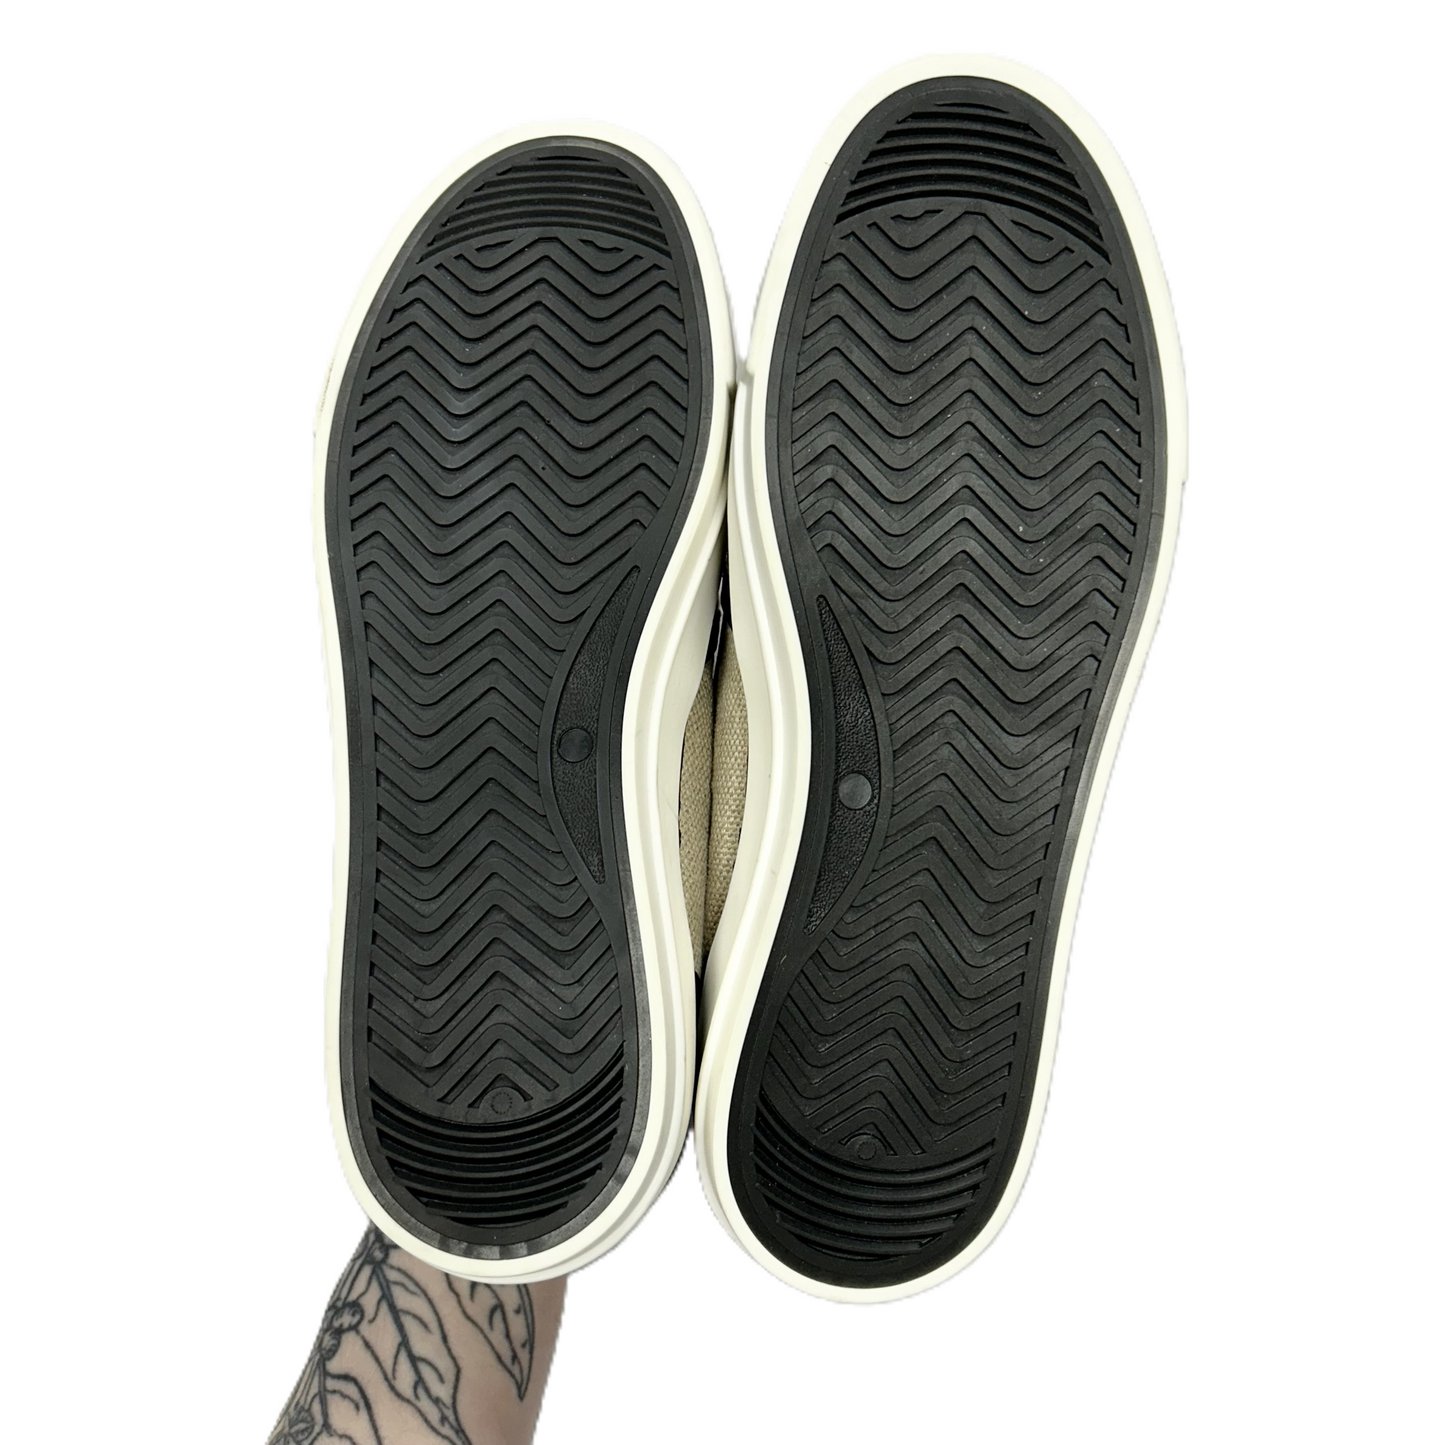 Tan Shoes Designer By M. Gemi, Size: 8.5